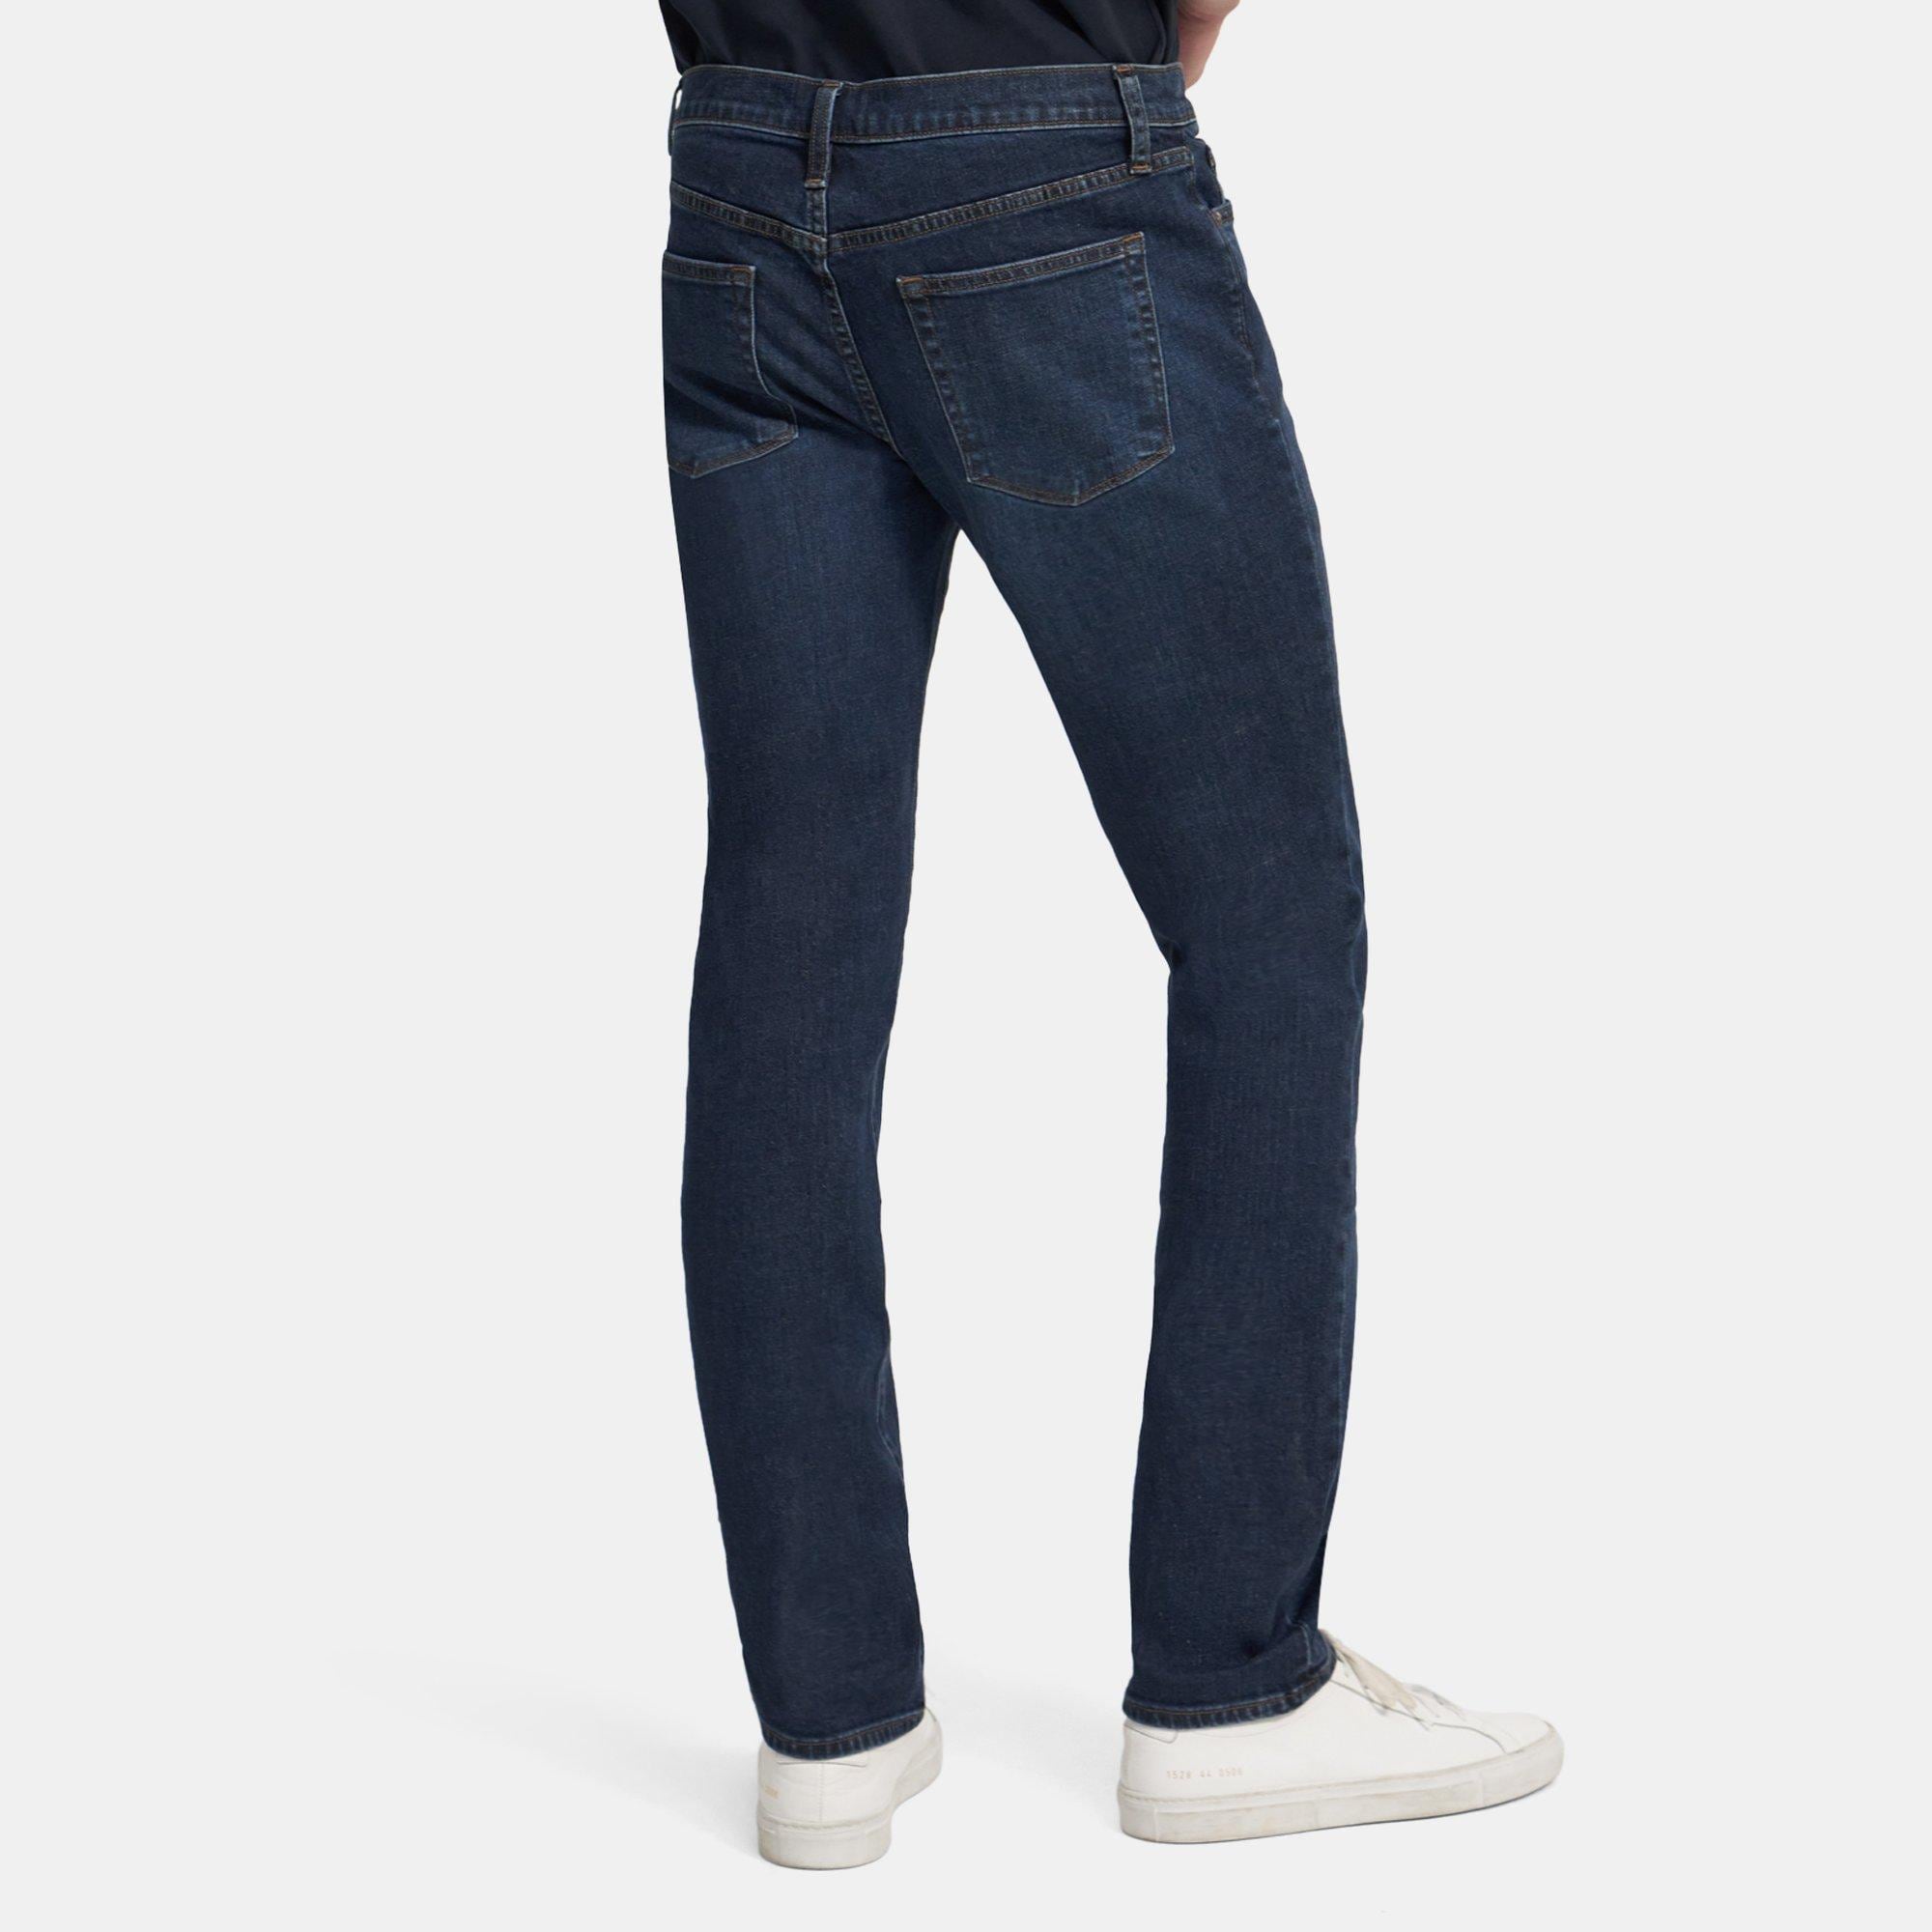 Classic and Stylish Men's Denim Jeans - J. Brand Kane